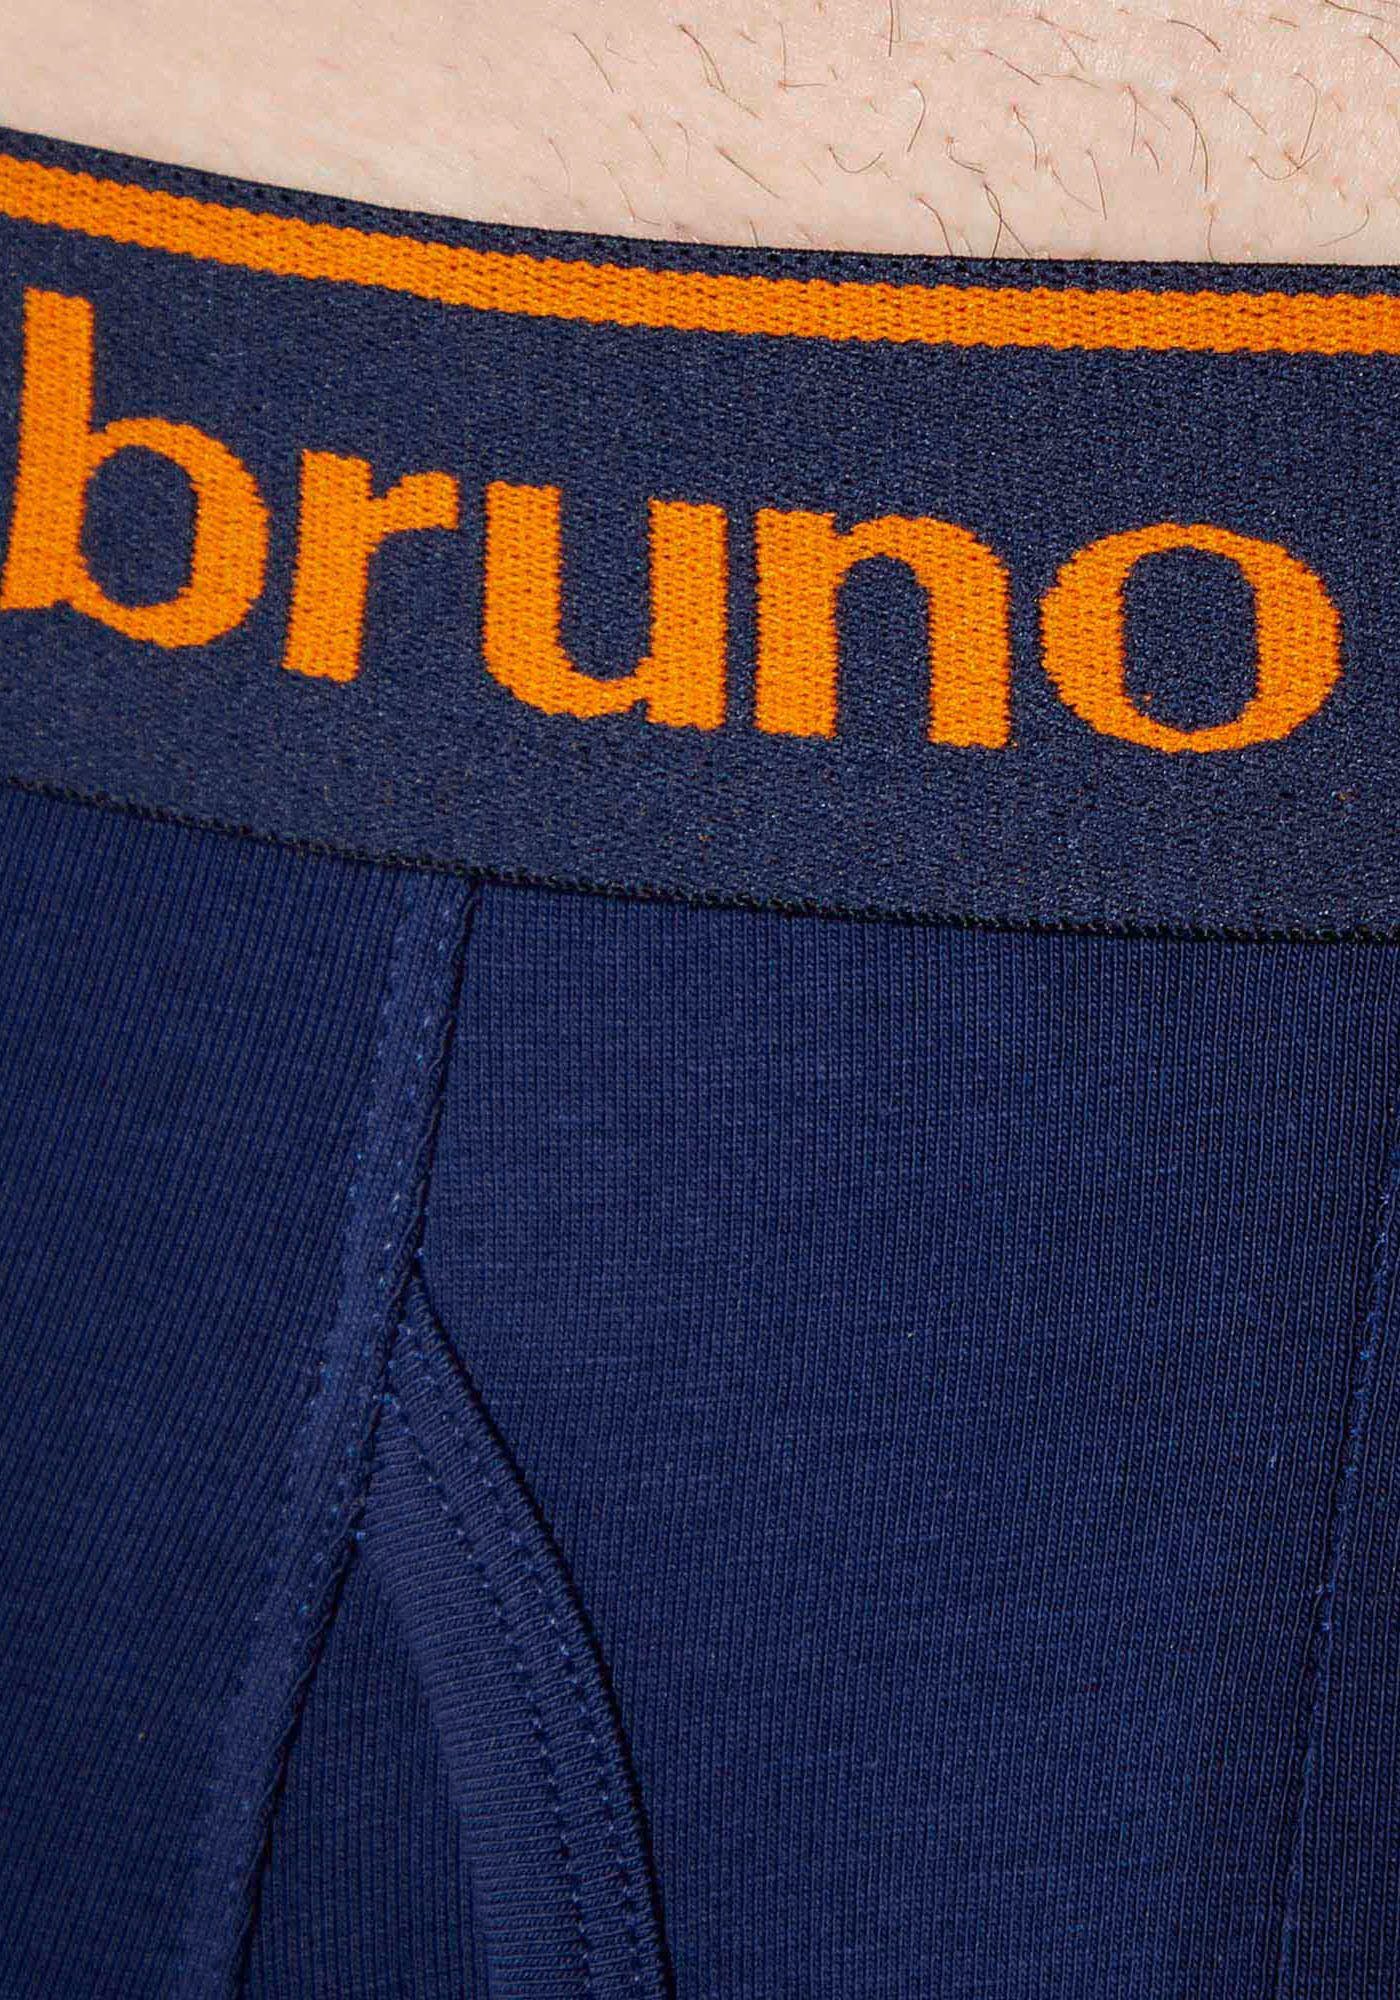 Bruno Banani Boxershorts 2-St) Kontrastfarbene Quick 2Pack Short Details (Packung, Access blau-schwarz